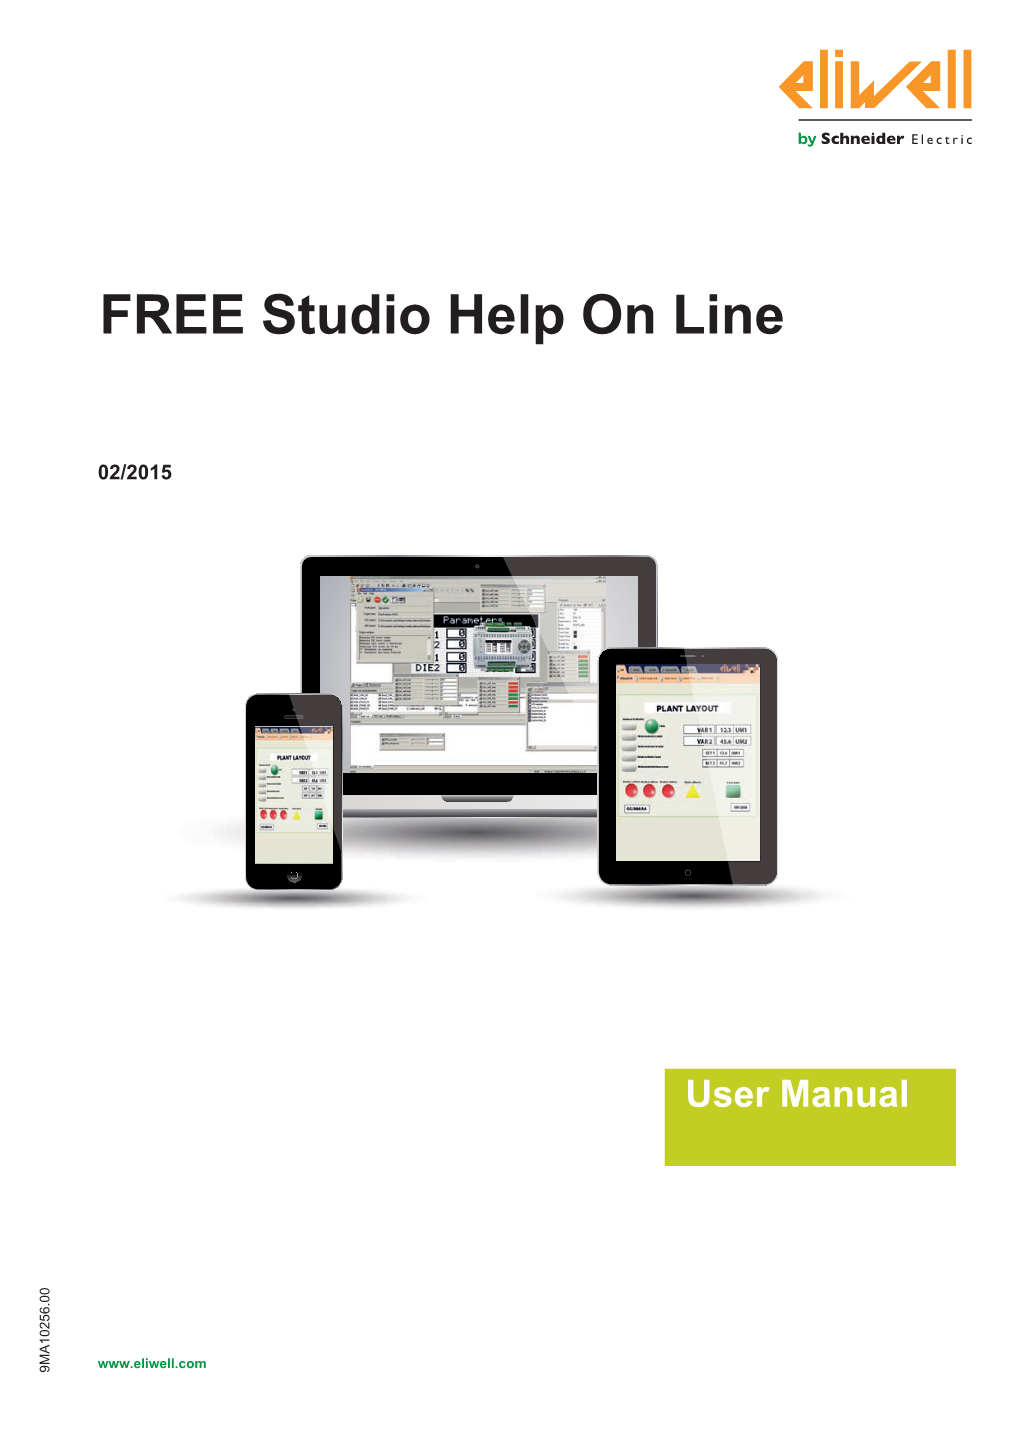 FREE Studio Help on Line